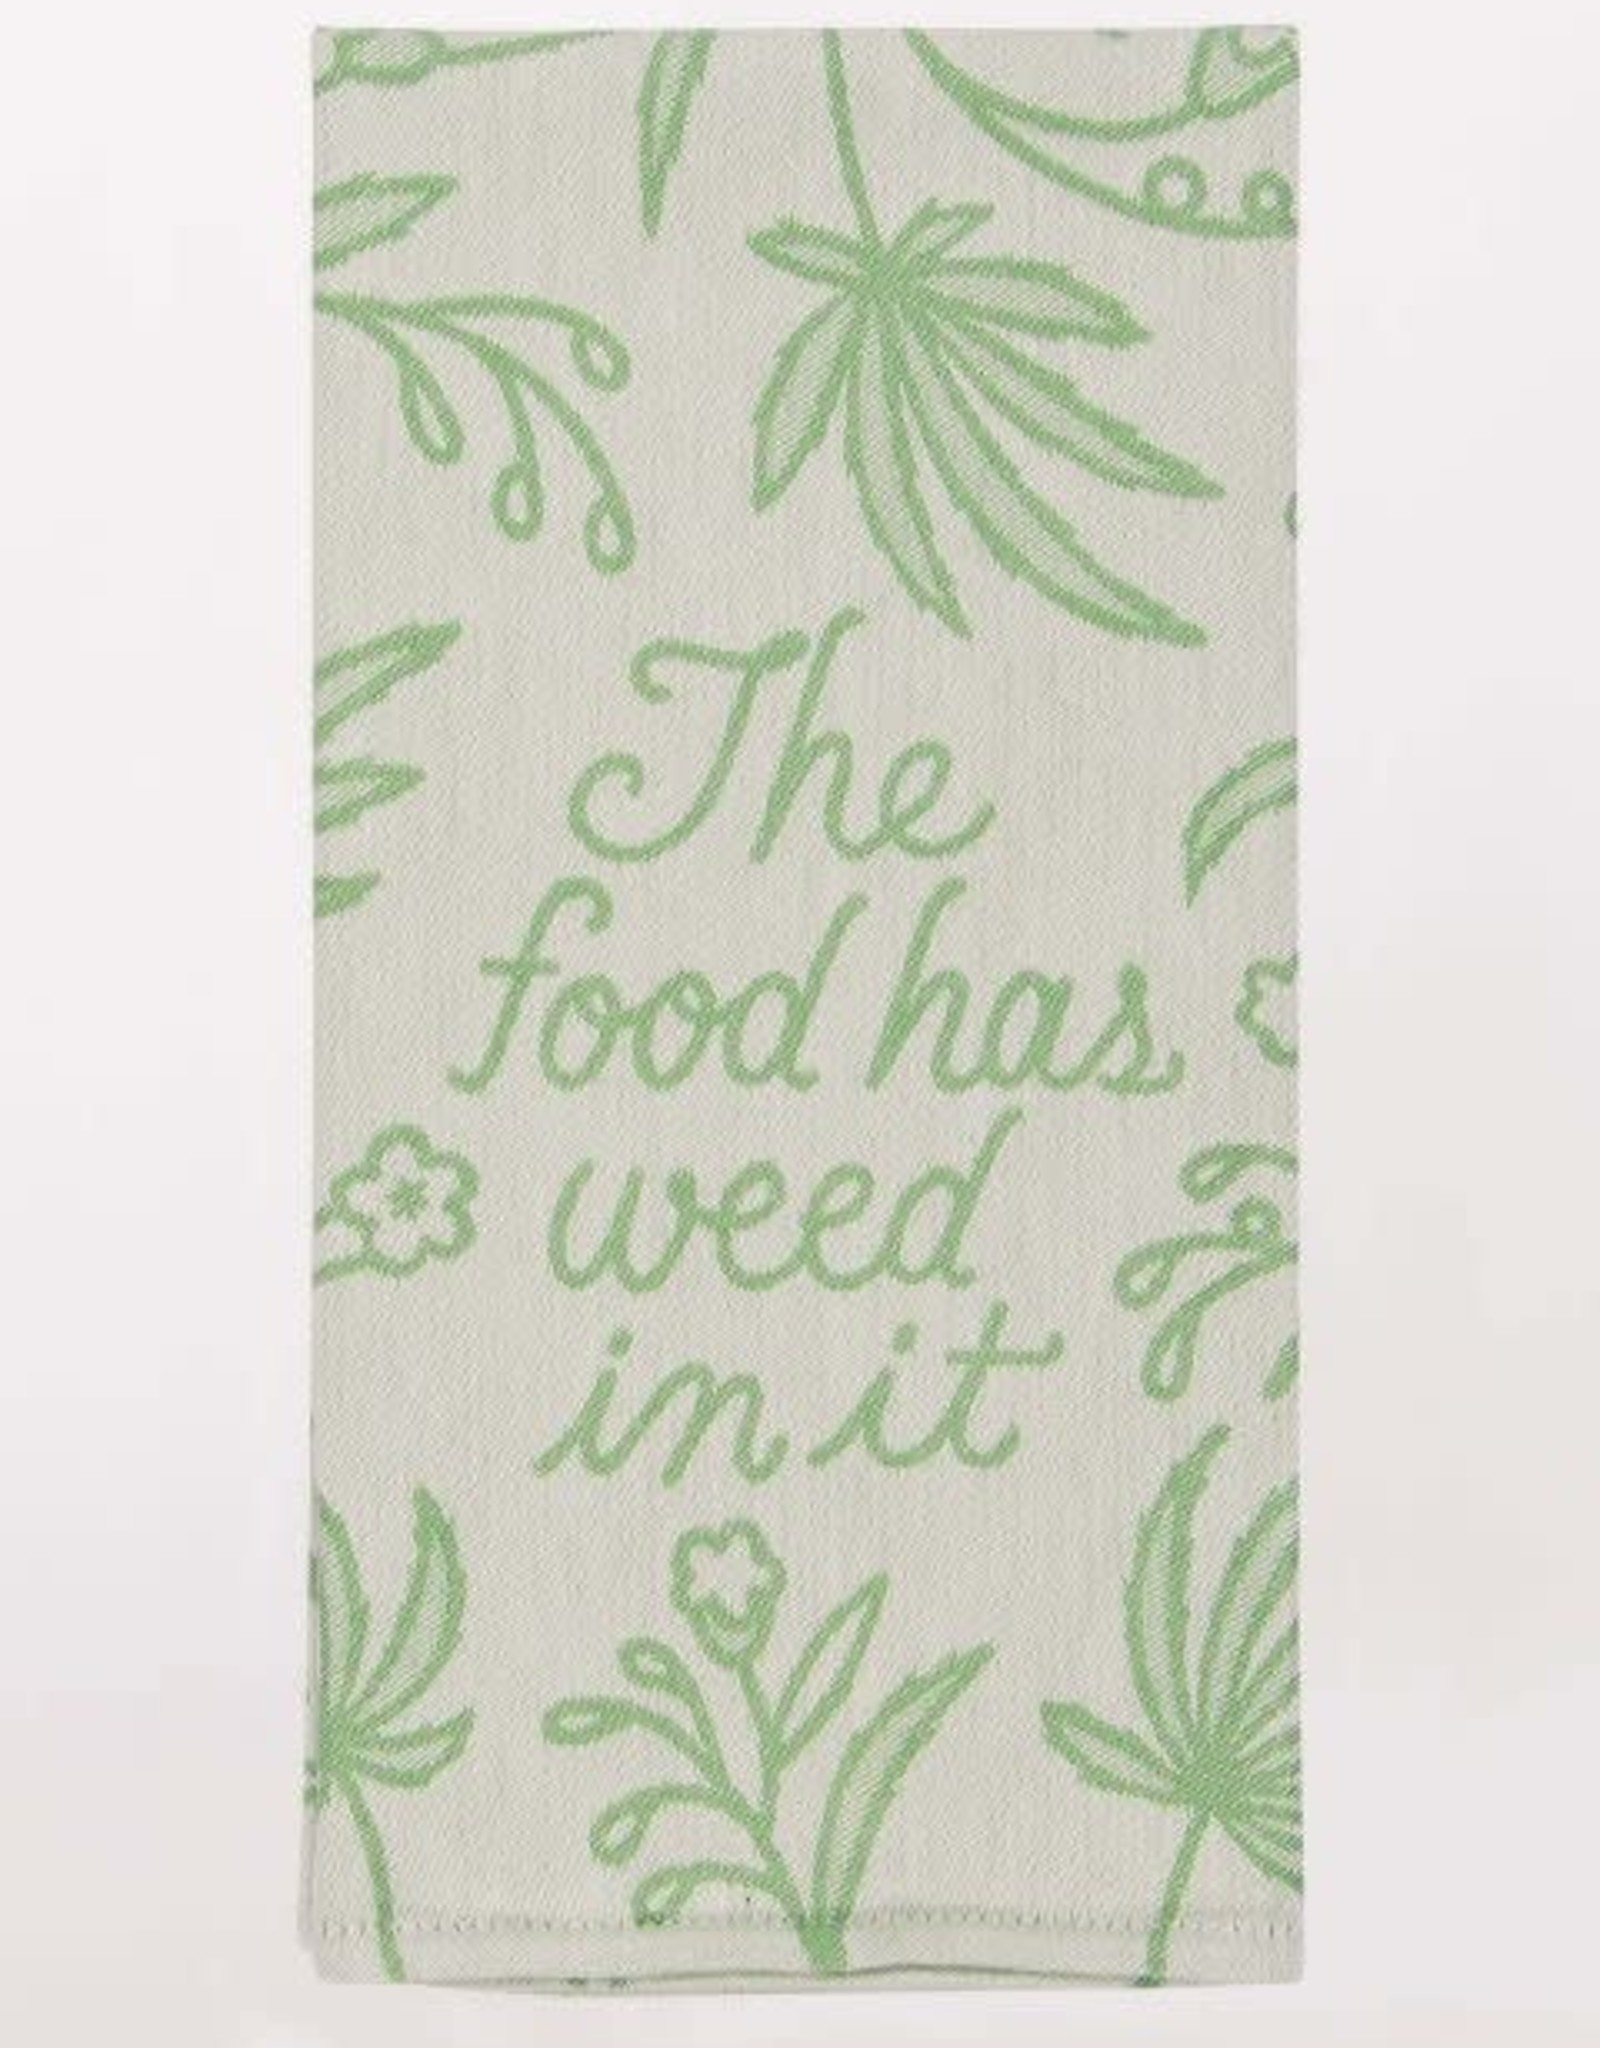 Food Has Weed In It Dish Towel